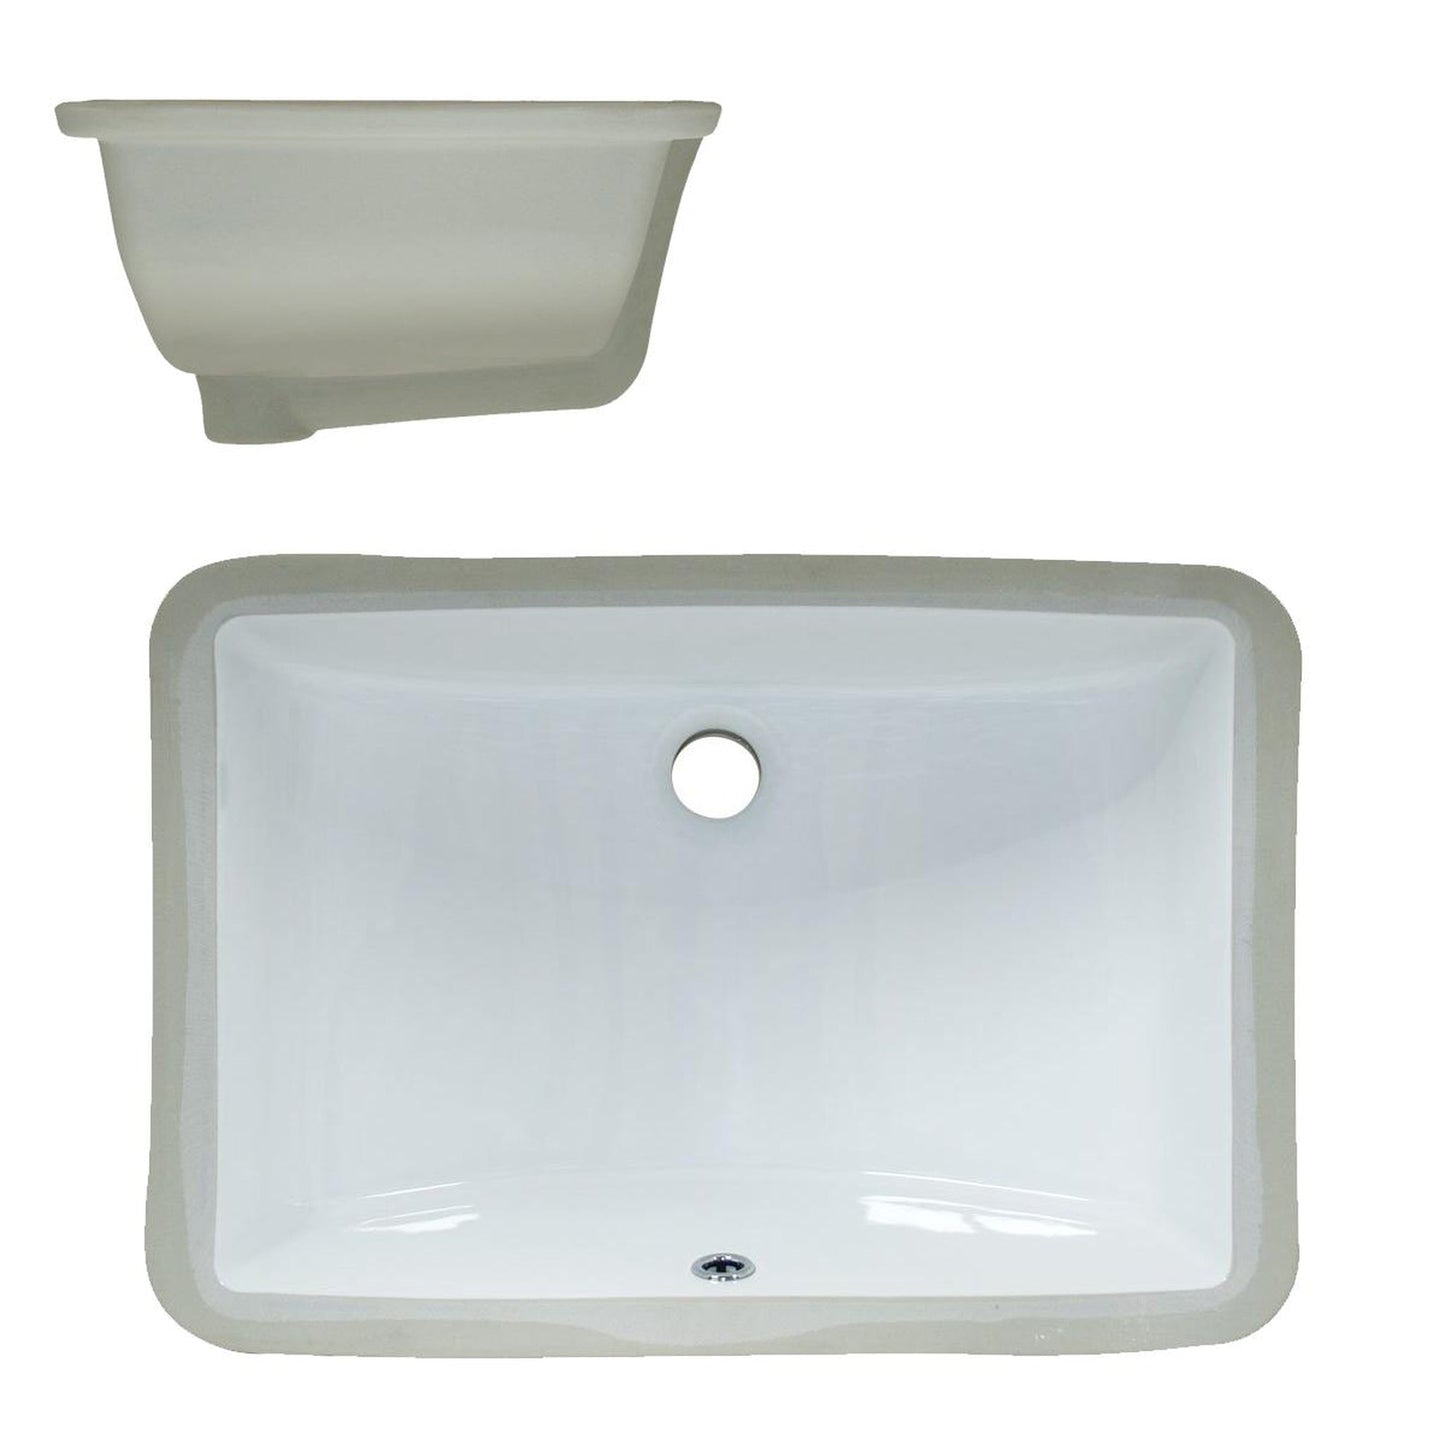 Pelican Int'l Pearl Series PL-3044 18 1/4" x 12" Extra Deep Bone Porcelain Undermount Bathroom Sink